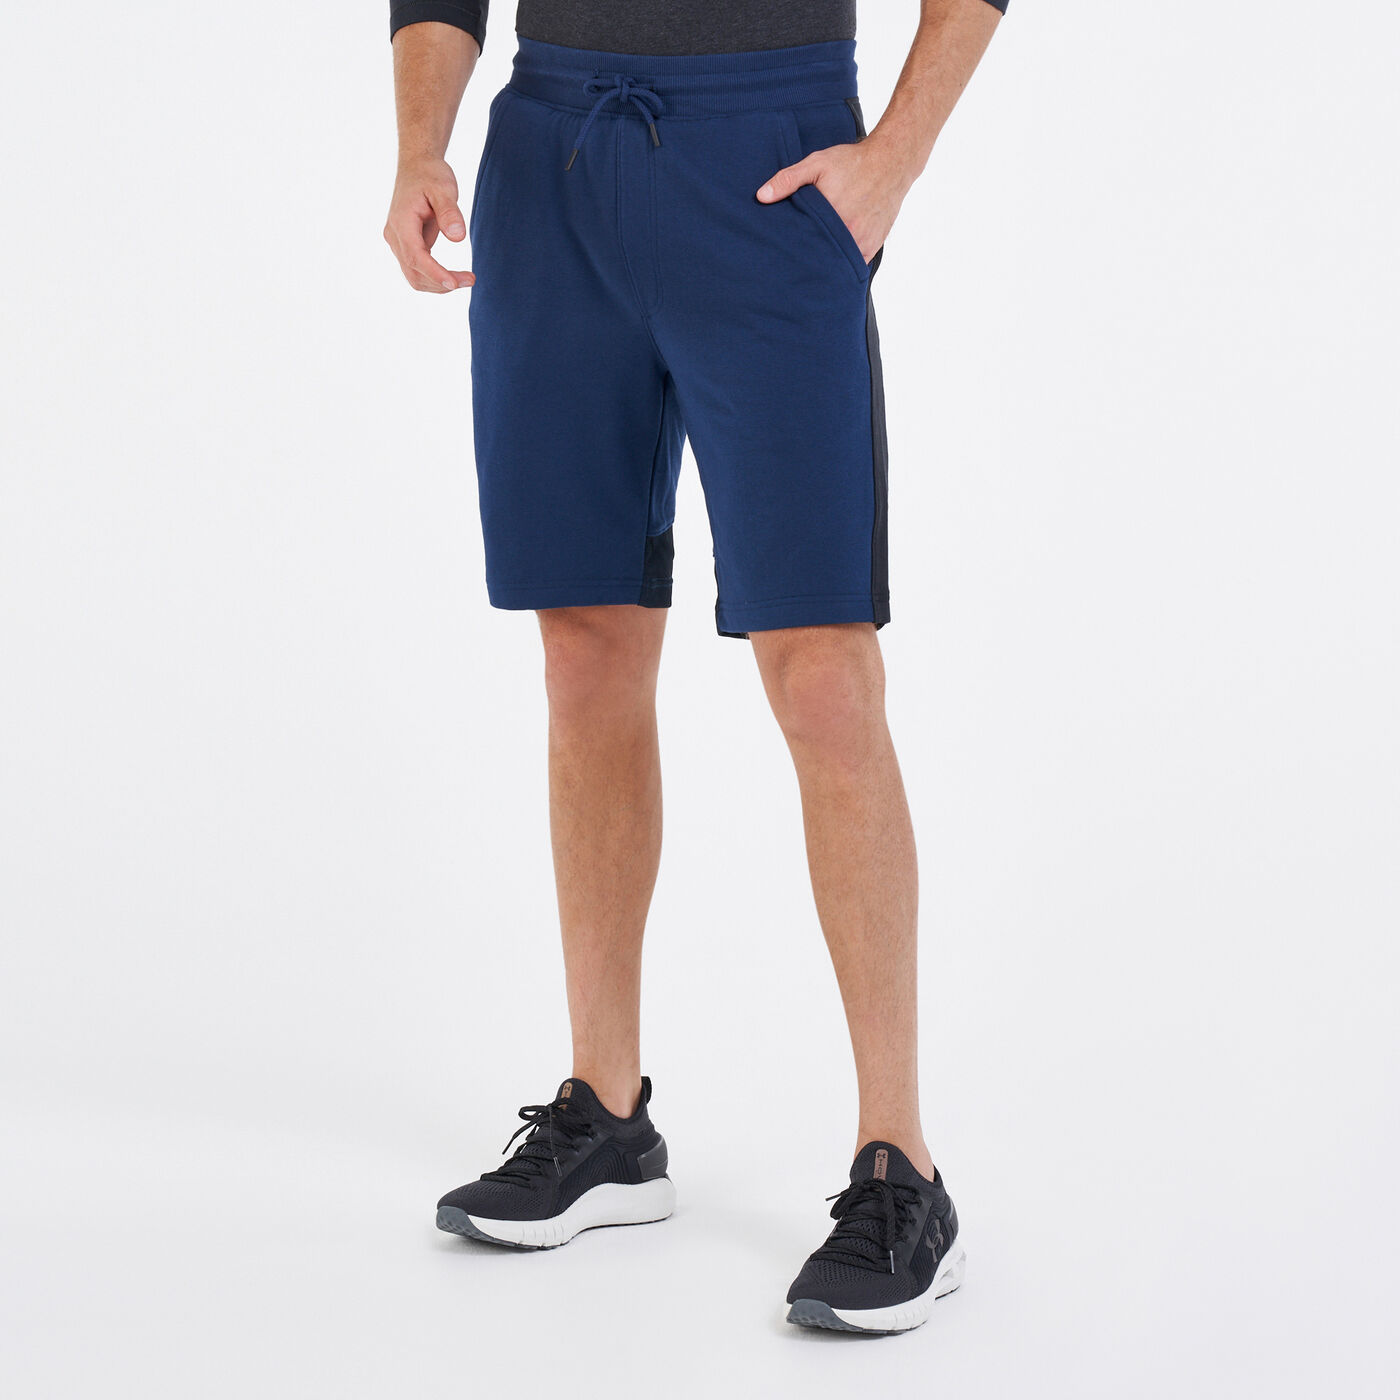 Men's Threadborne Shorts